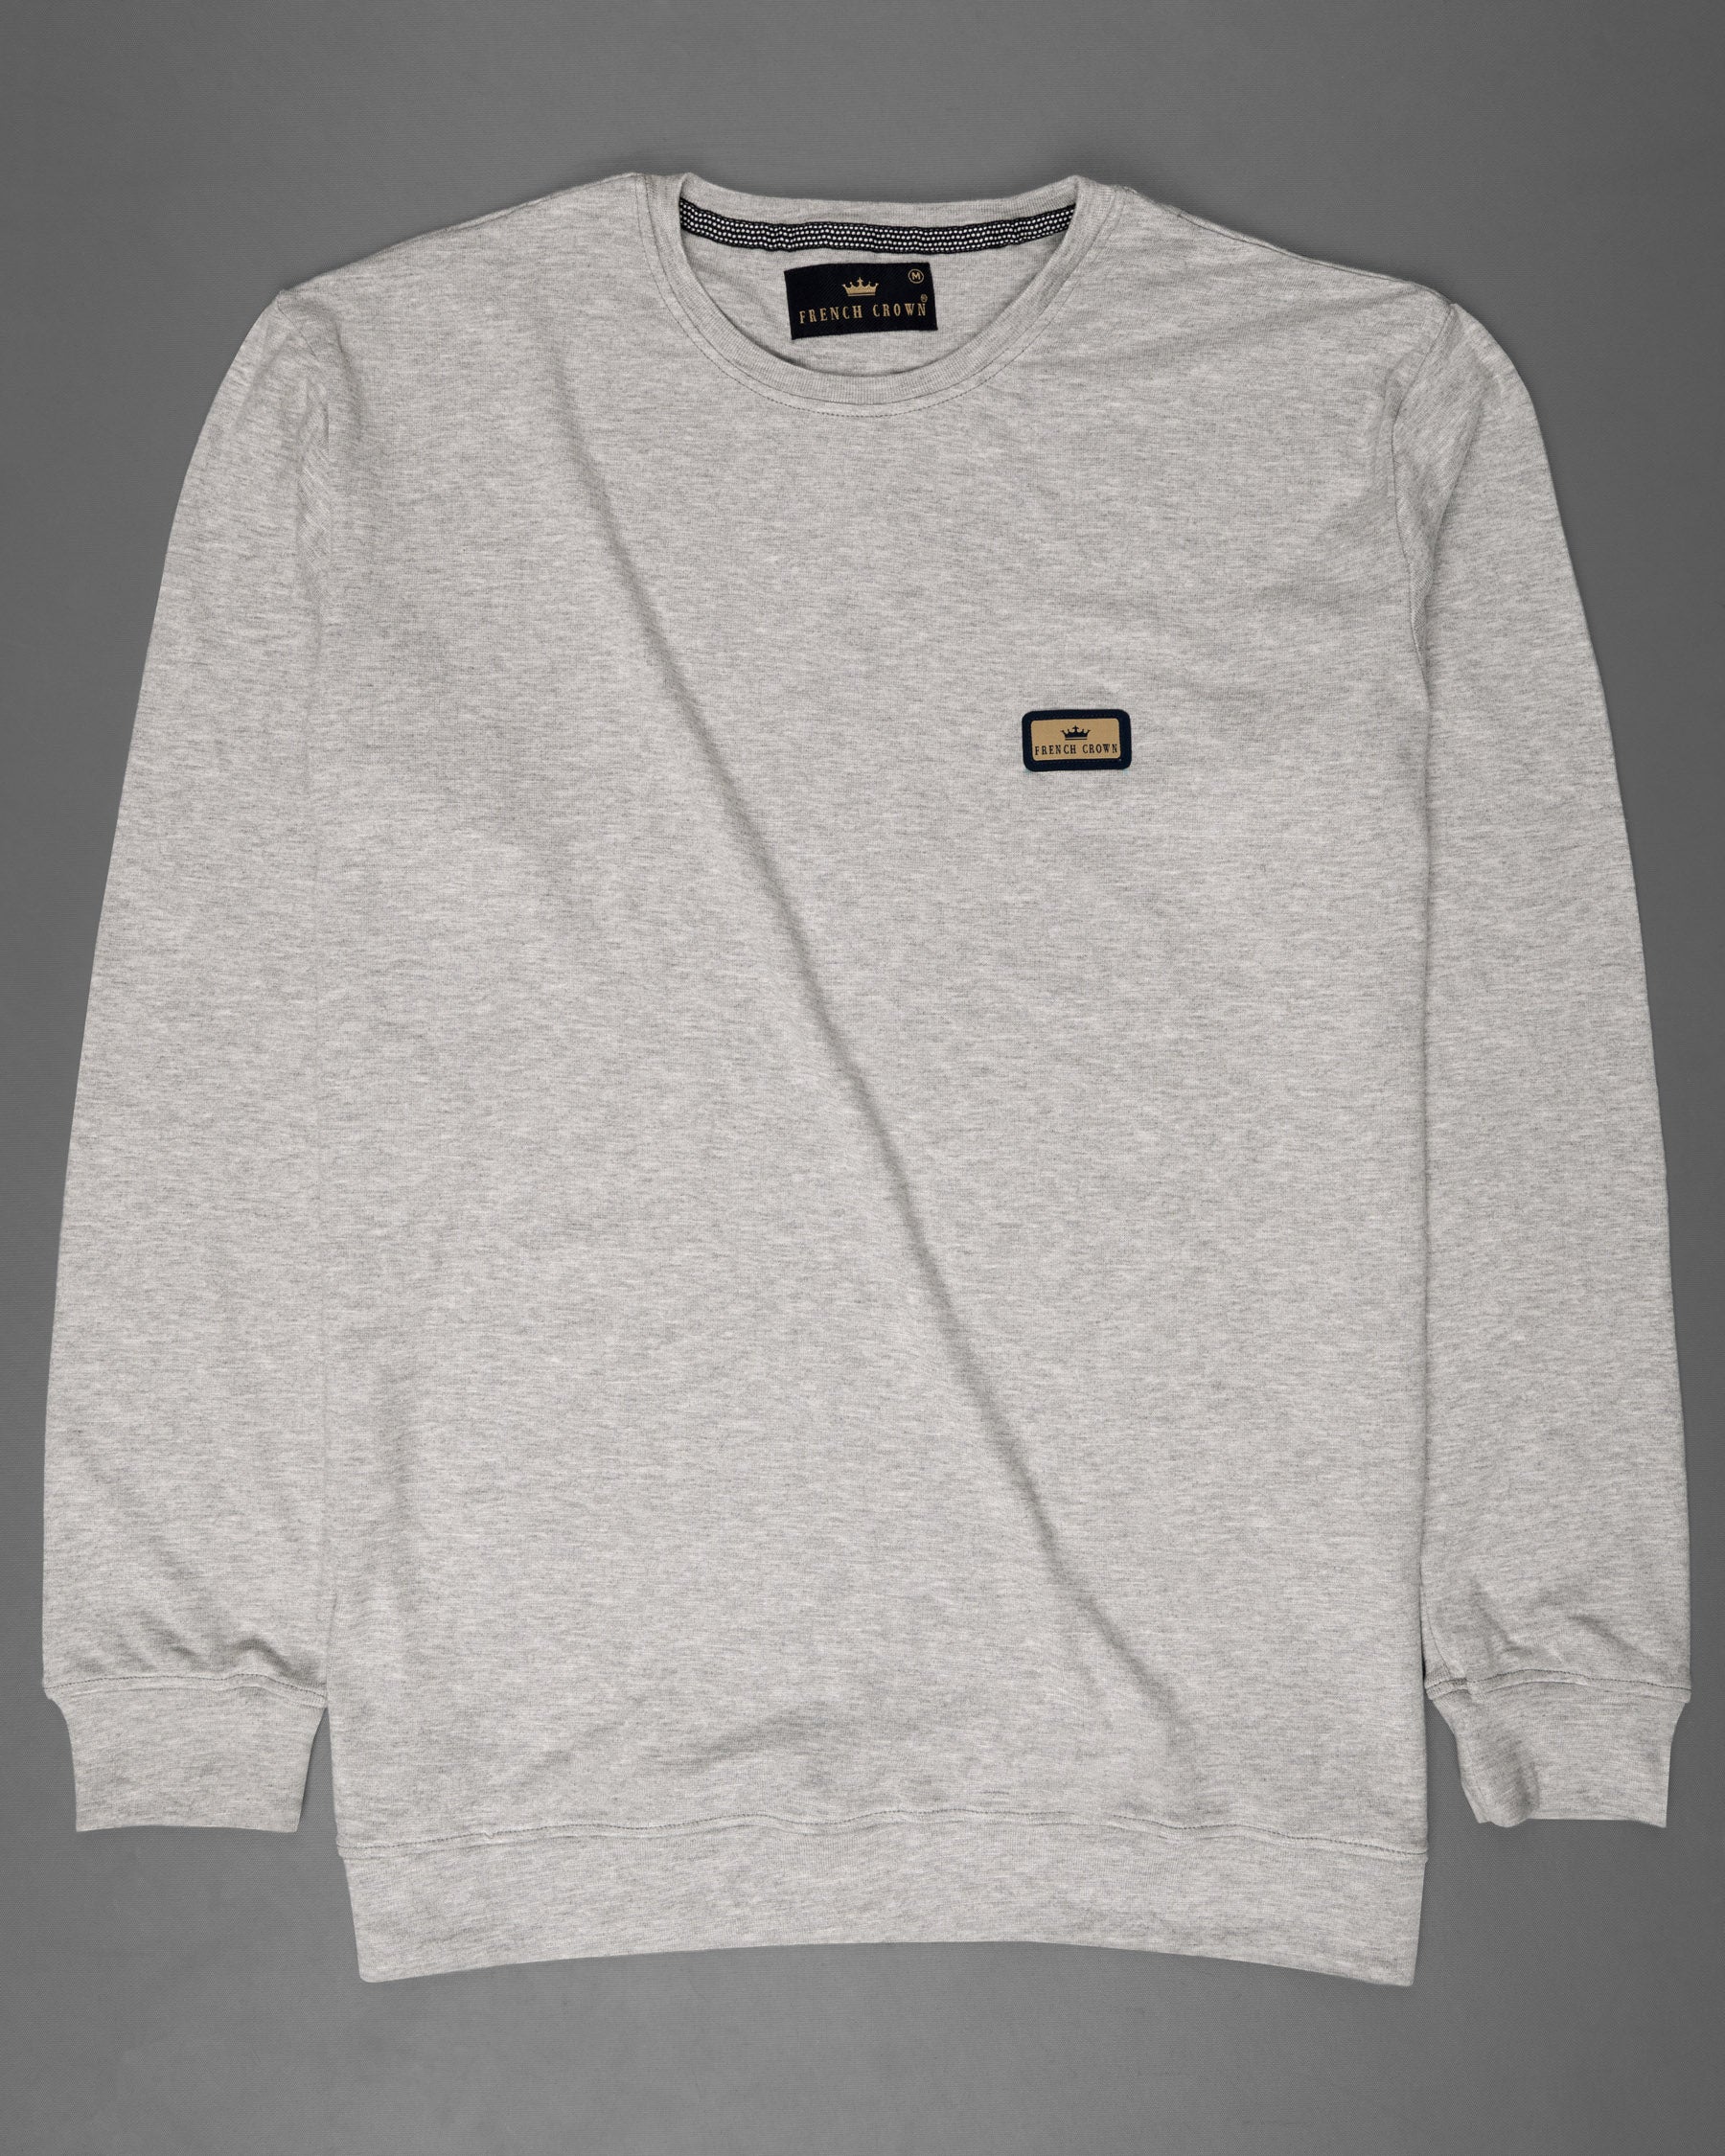 Nobel Grey Full Sleeve Super Soft Premium Cotton Sweatshirt TS482-S, TS482-M, TS482-L, TS482-XL, TS482-XXL